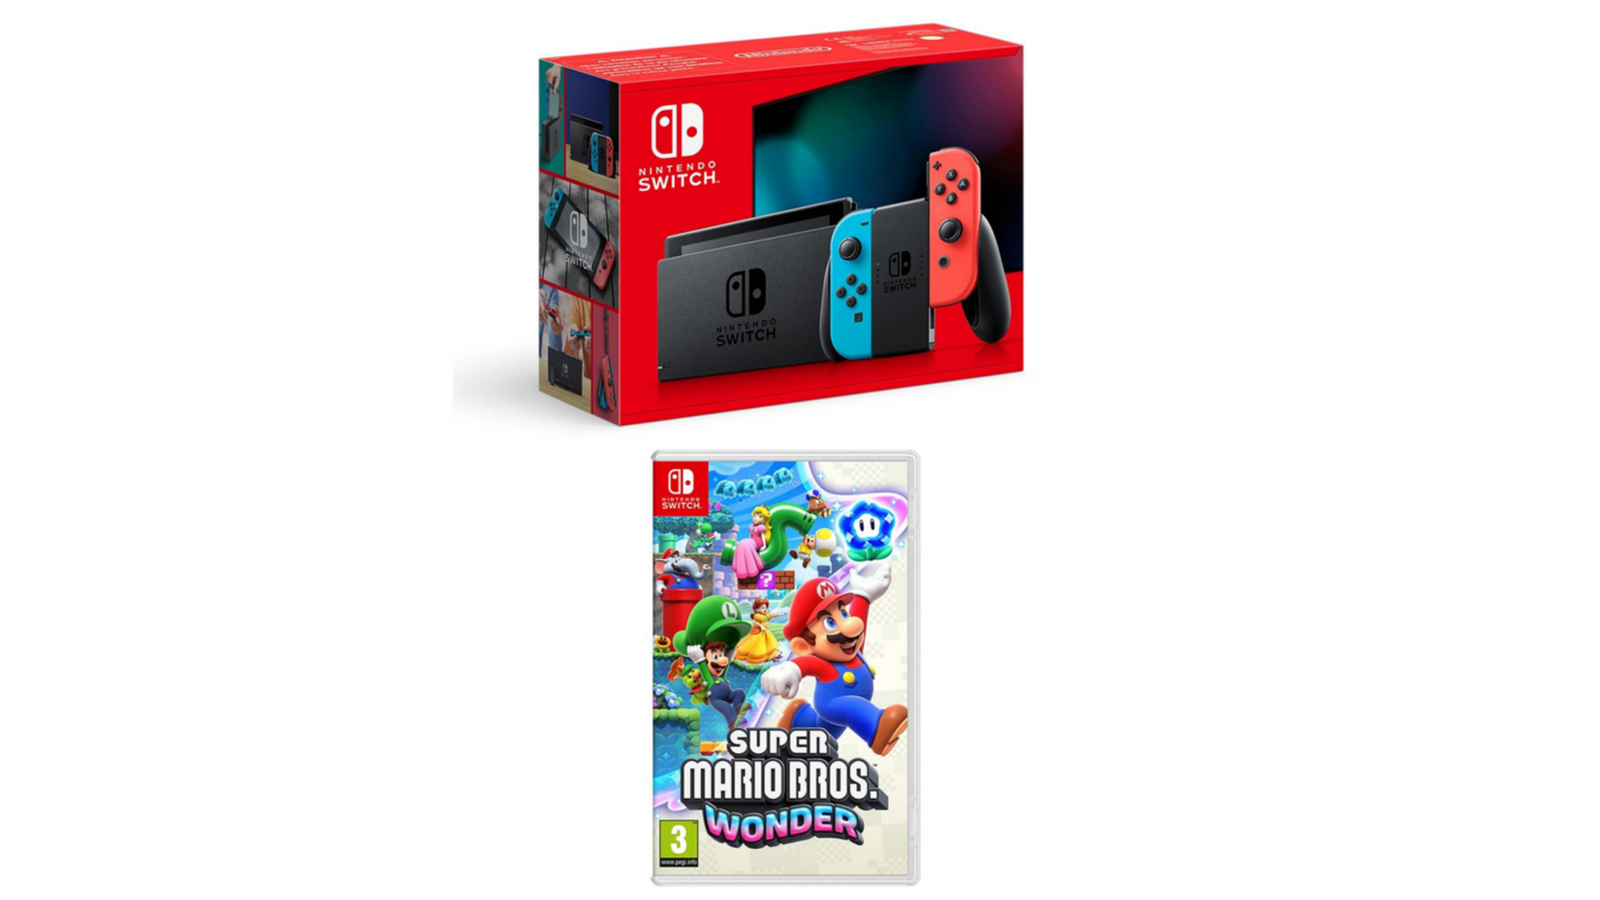 Buy SWITCH Mario Wonder bundle